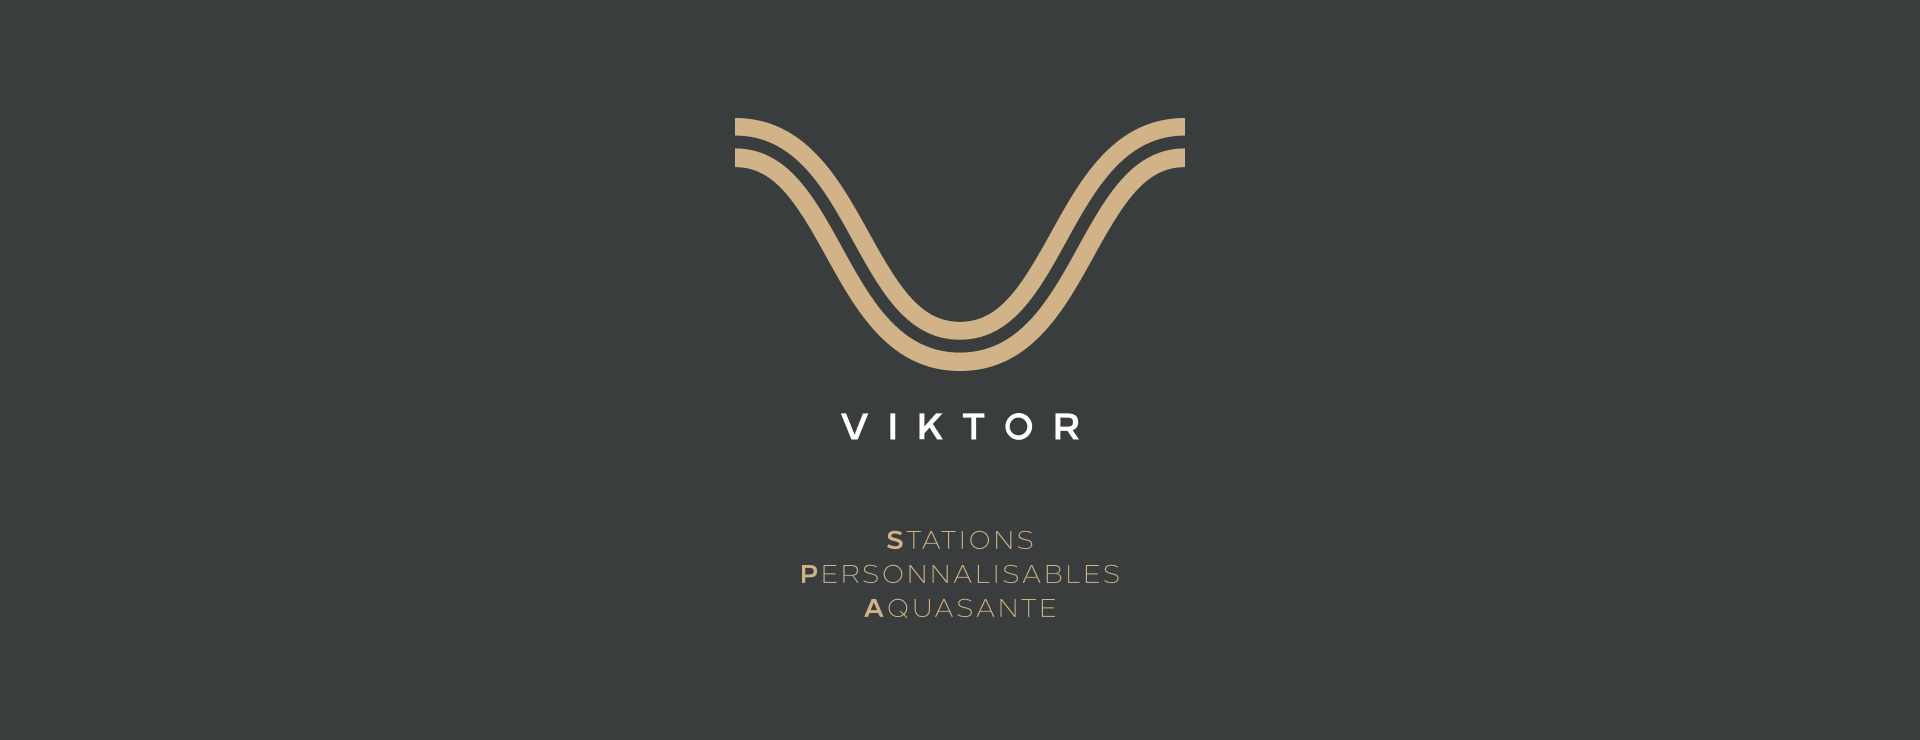 VIKTOR Logo - Aquasanté Custom Stations